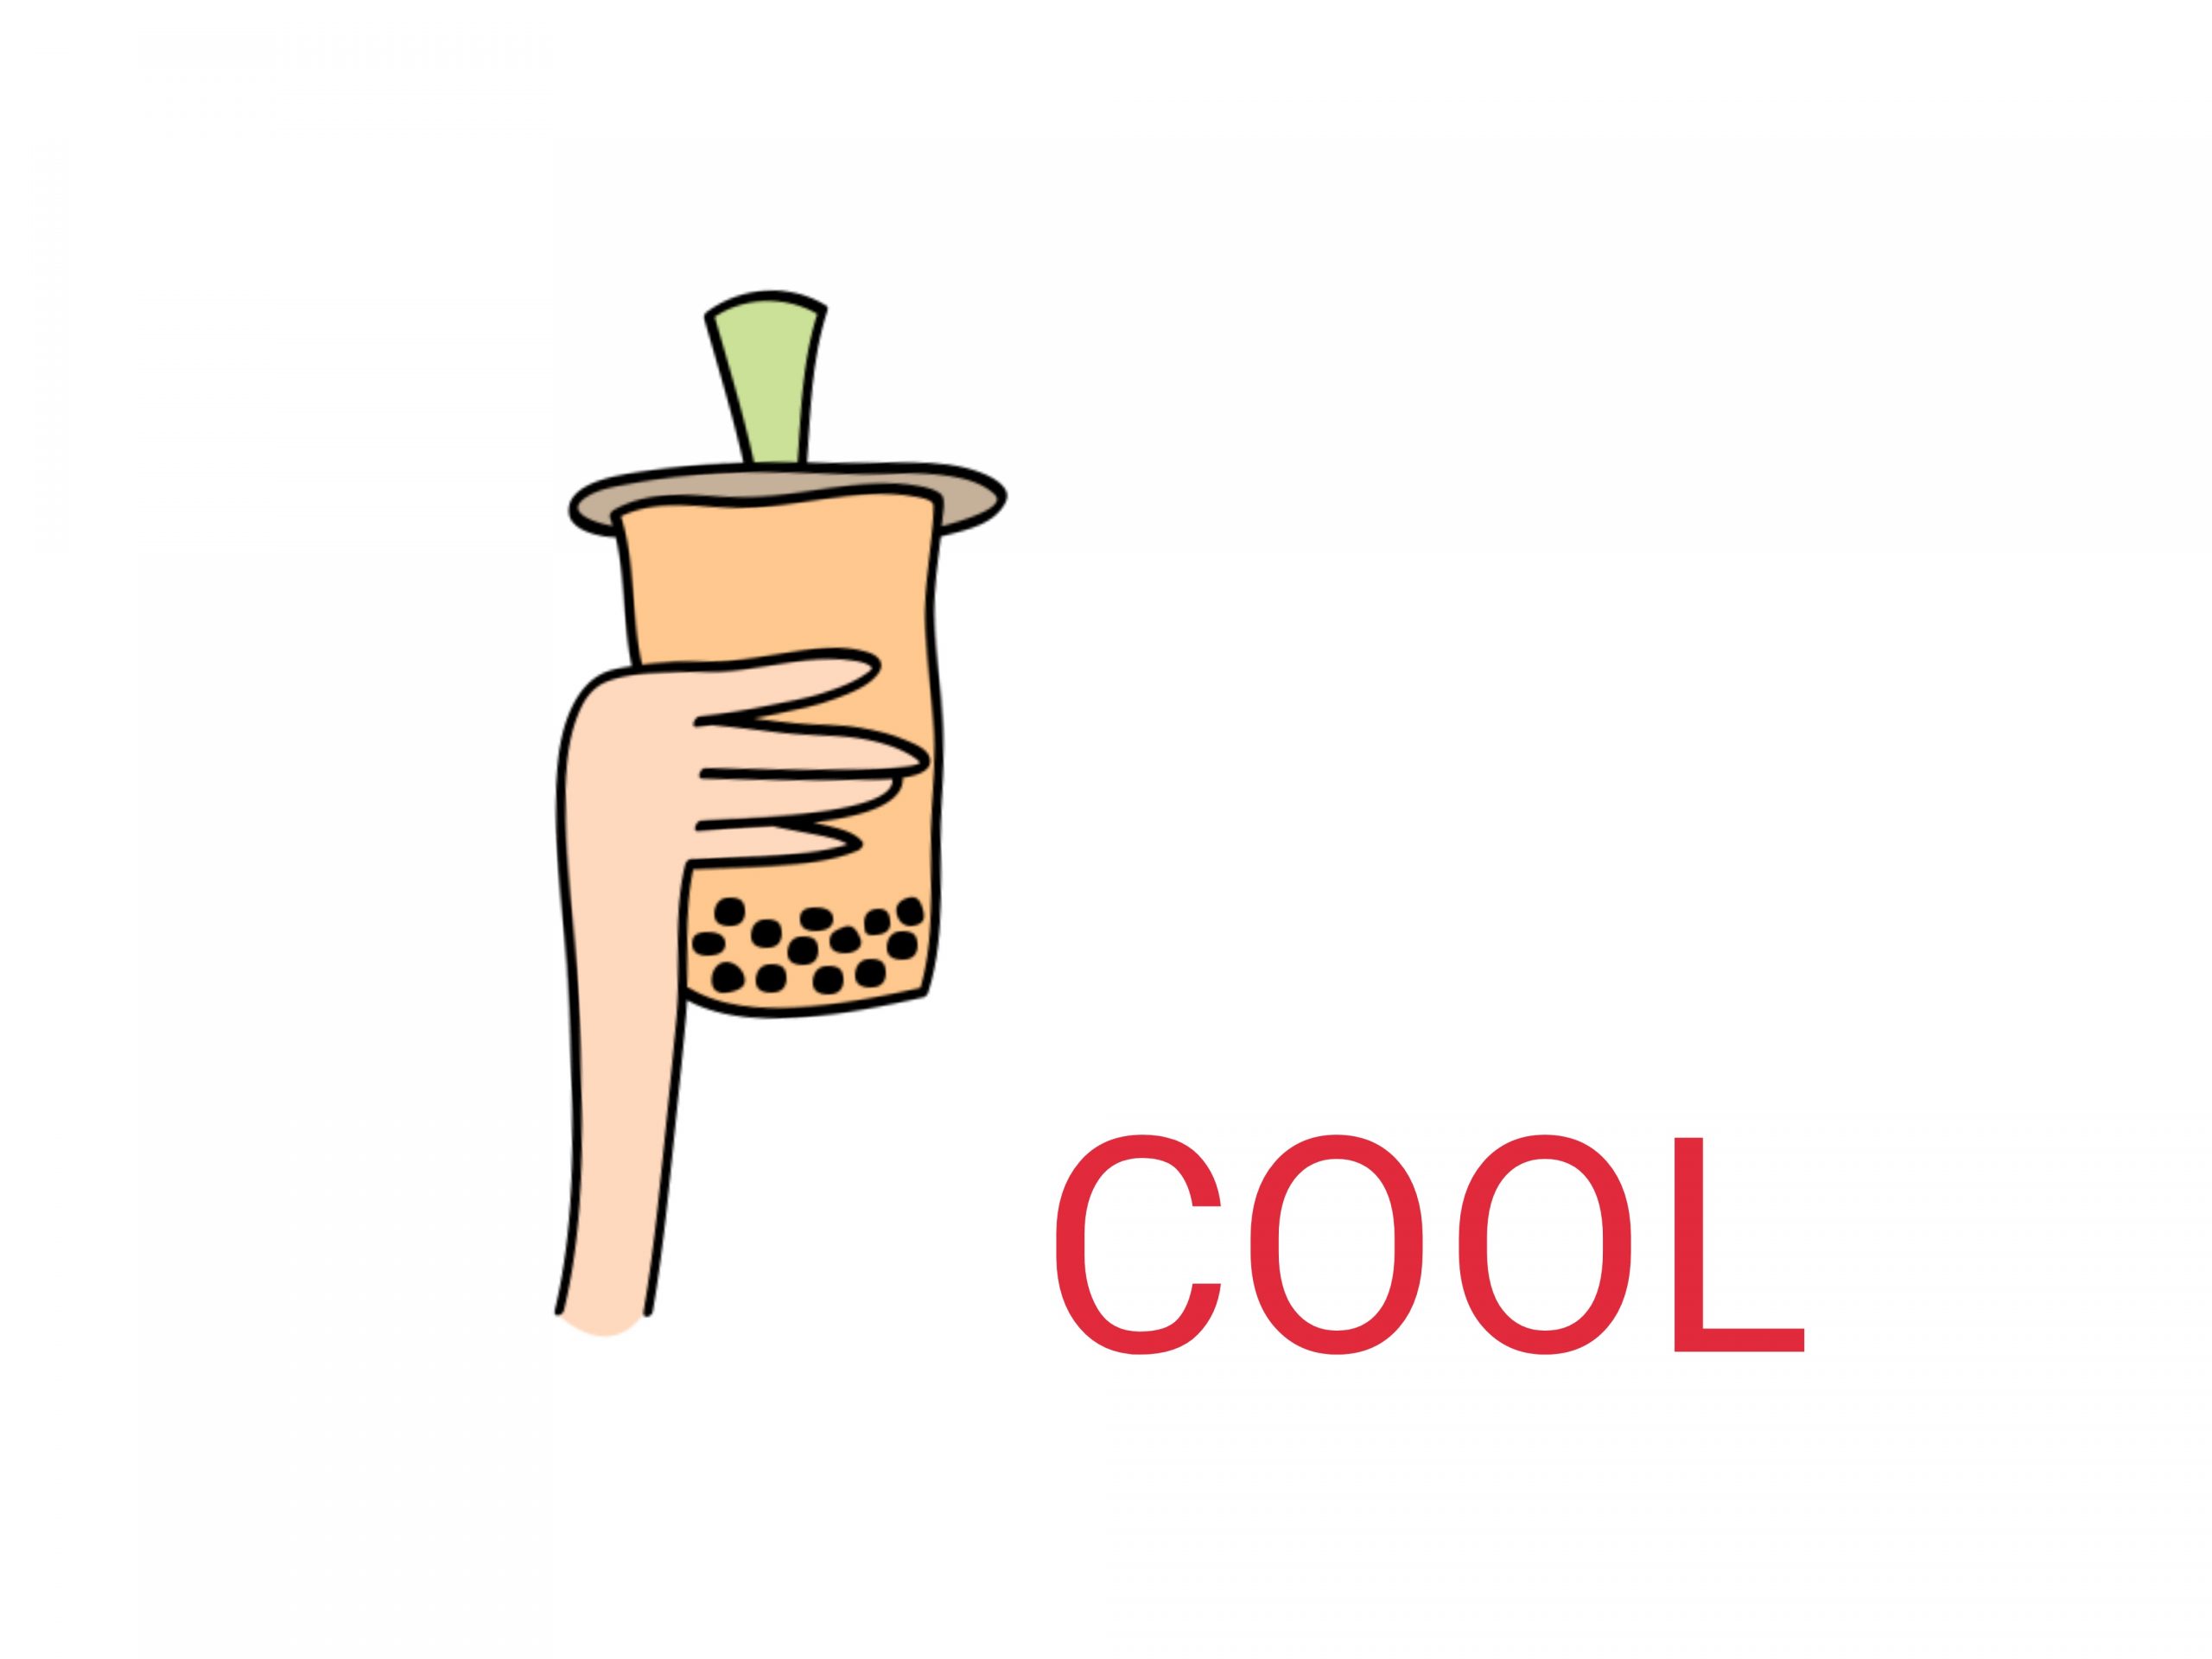 Cool fruit juice illustration